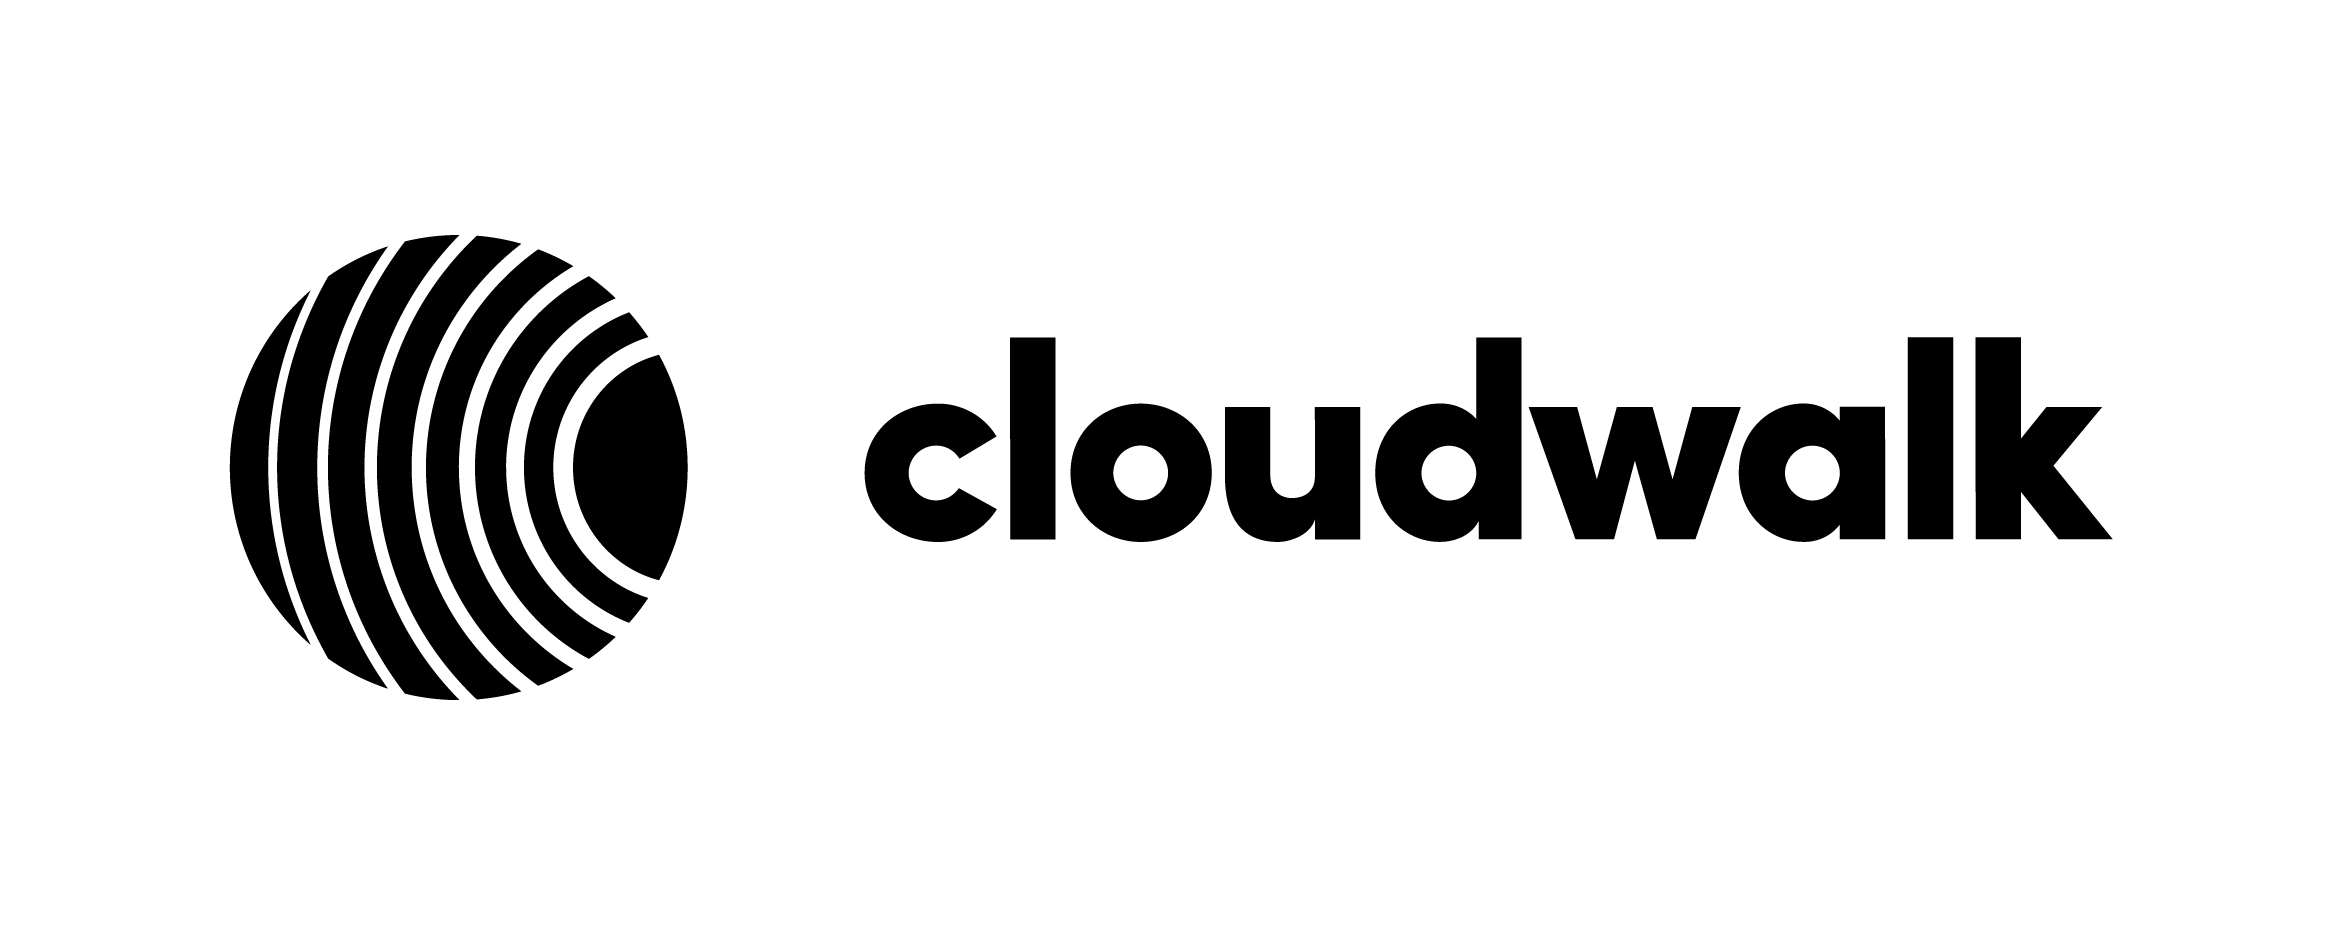 cloudwalk logo